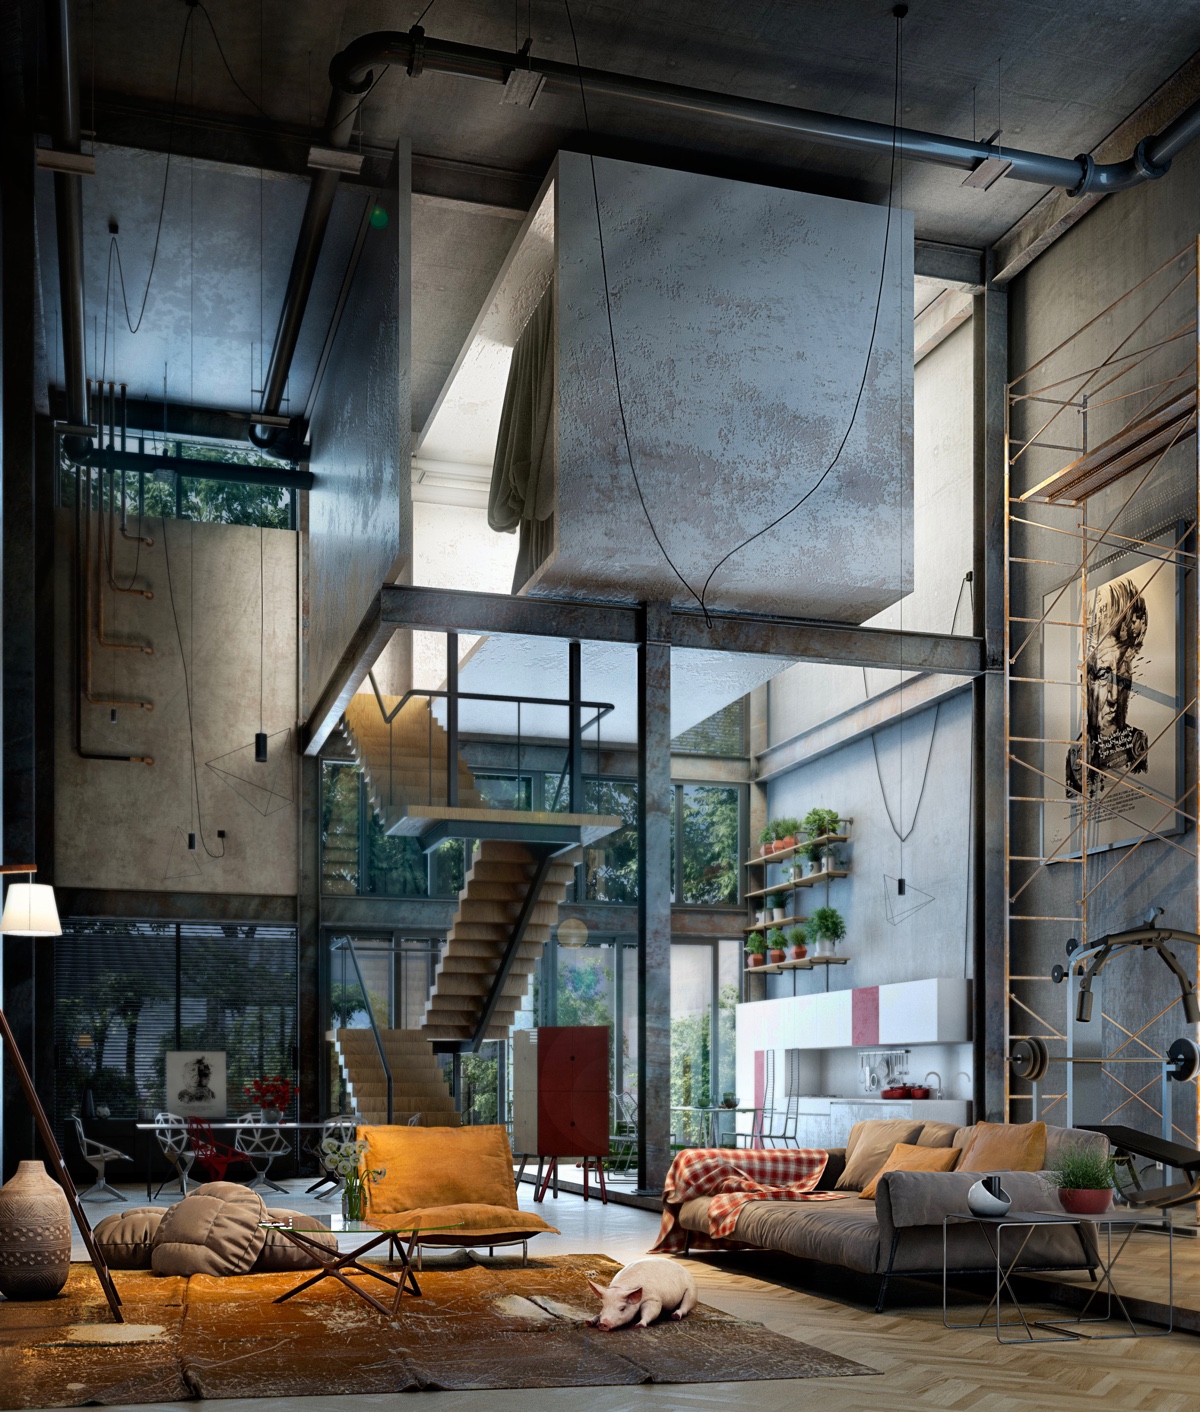 Design ideas for dark living rooms "width =" 1200 "height =" 1412 "srcset =" https://mileray.com/wp-content/uploads/2020/05/1588518125_904_Loft-Living-Room-Design-With-Modern-Industrial-Style.jpg 1200w, https: // myfashionos. com / wp-content / uploads / 2016/06 / Rogelio-Isai-255x300.jpg 255w, https://mileray.com/wp-content/uploads/2016/06/Rogelio-Isai-768x904.jpg 768w, https: //mileray.com/wp-content/uploads/2016/06/Rogelio-Isai-870x1024.jpg 870w, https://mileray.com/wp-content/uploads/2016/06/Rogelio-Isai-696x819.jpg 696w, https://mileray.com/wp-content/uploads/2016/06/Rogelio-Isai-1068x1257.jpg 1068w, https://mileray.com/wp-content/uploads/2016/06/Rogelio-Isai -357x420.jpg 357w "sizes =" (maximum width: 1200px) 100vw, 1200px